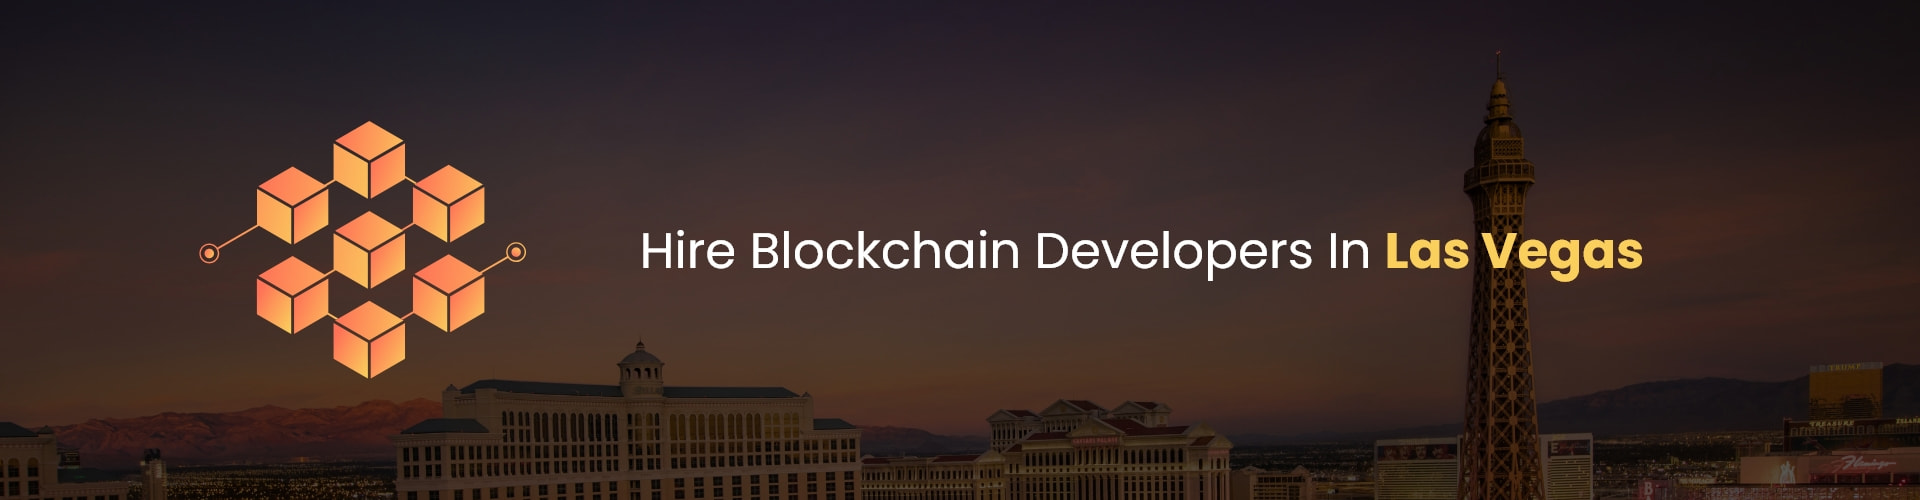 hire blockchain developers in las vegas